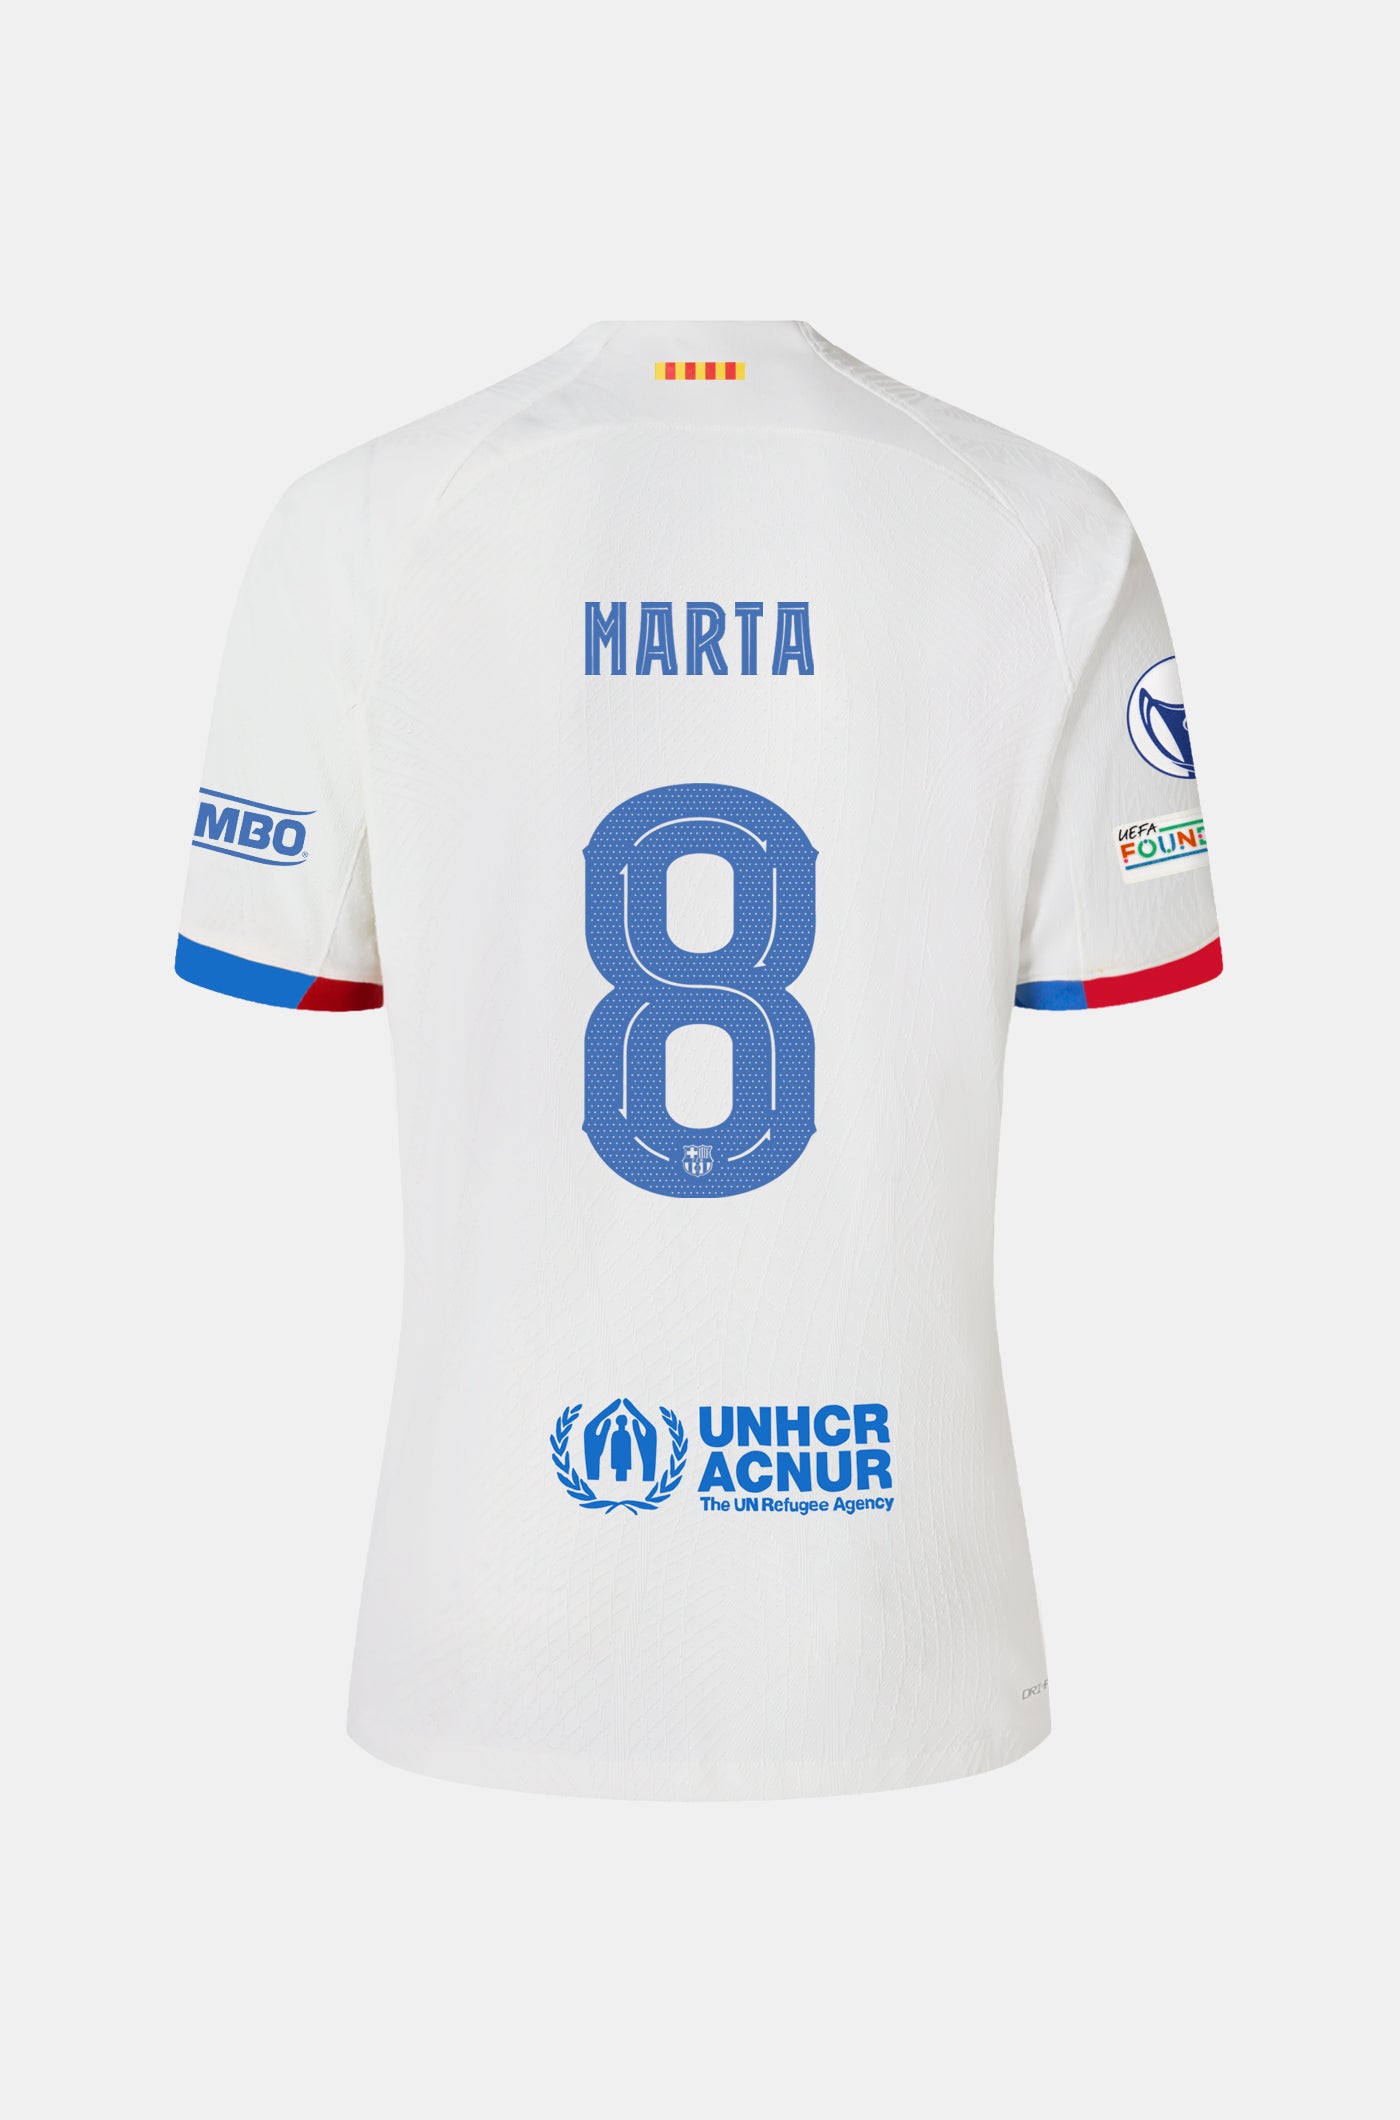 UWCL FC Barcelona Away Shirt 23/24 Player’s Edition - Women  - MARTA